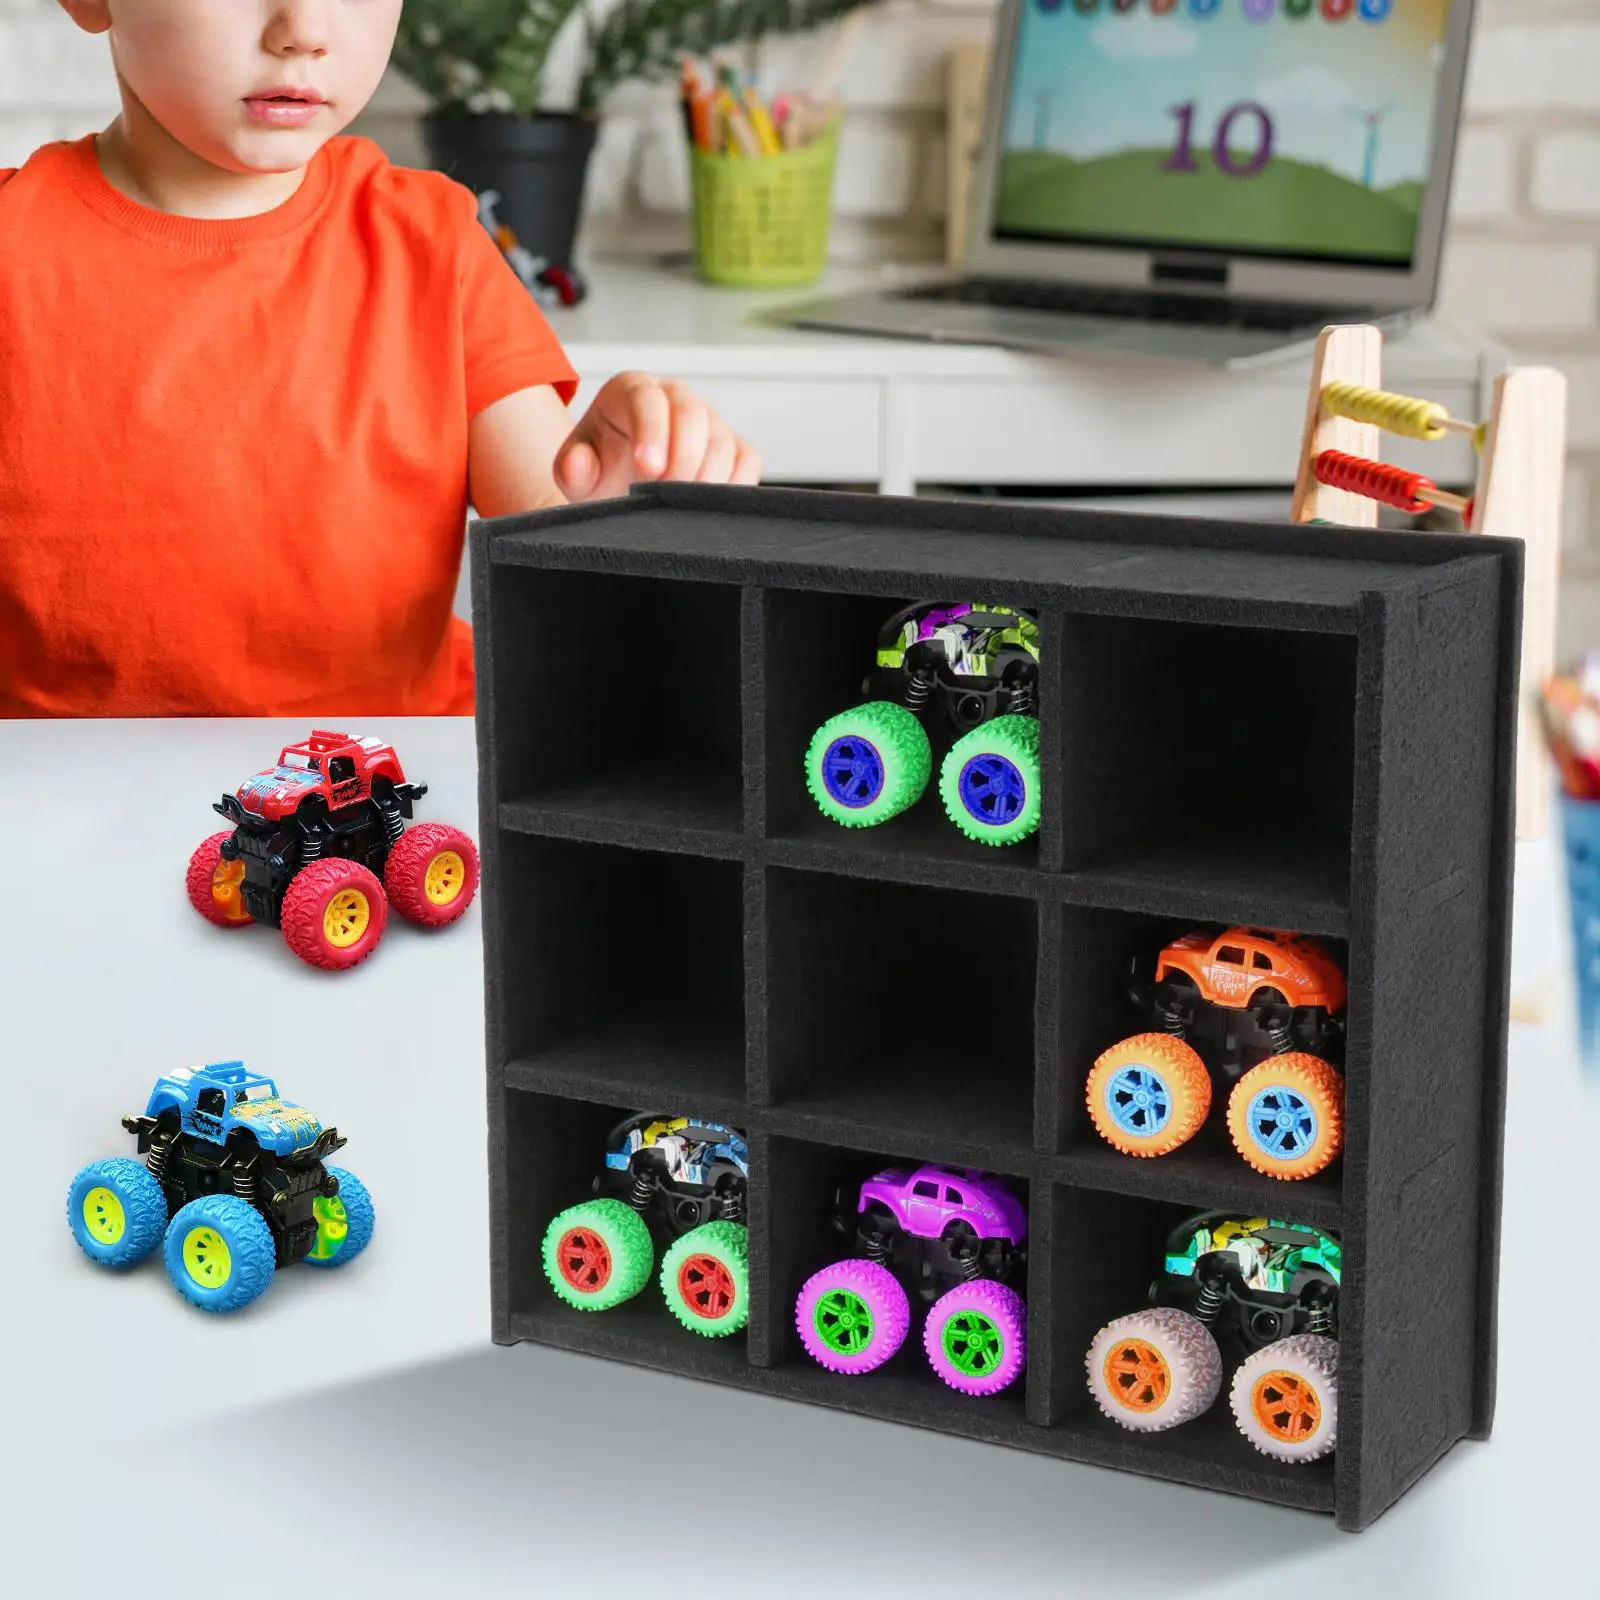 Monster Trucks Toy Wall Mount Display Case with 9 Slots Black Color Inside Each Slot 10cmx8.5cm DIY Assembled for Children